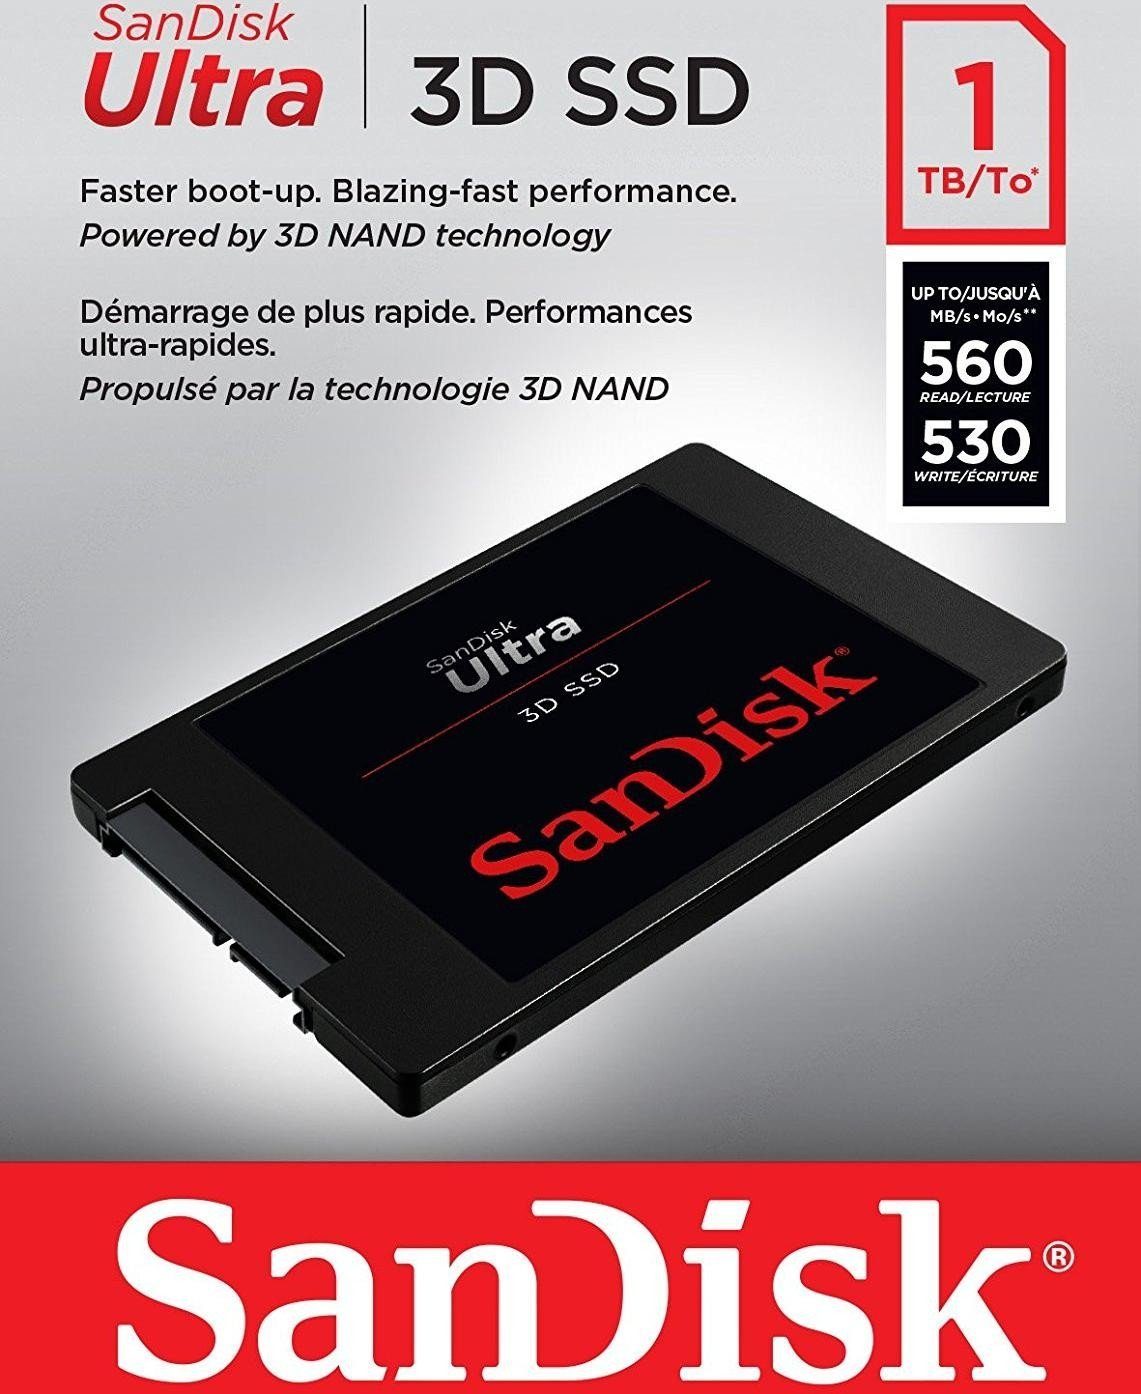 Sandisk Ultra 3D SSD interne 530 560 (1TB) Schreibgeschwindigkeit Lesegeschwindigkeit, 2,5"" MB/S SSD MB/S